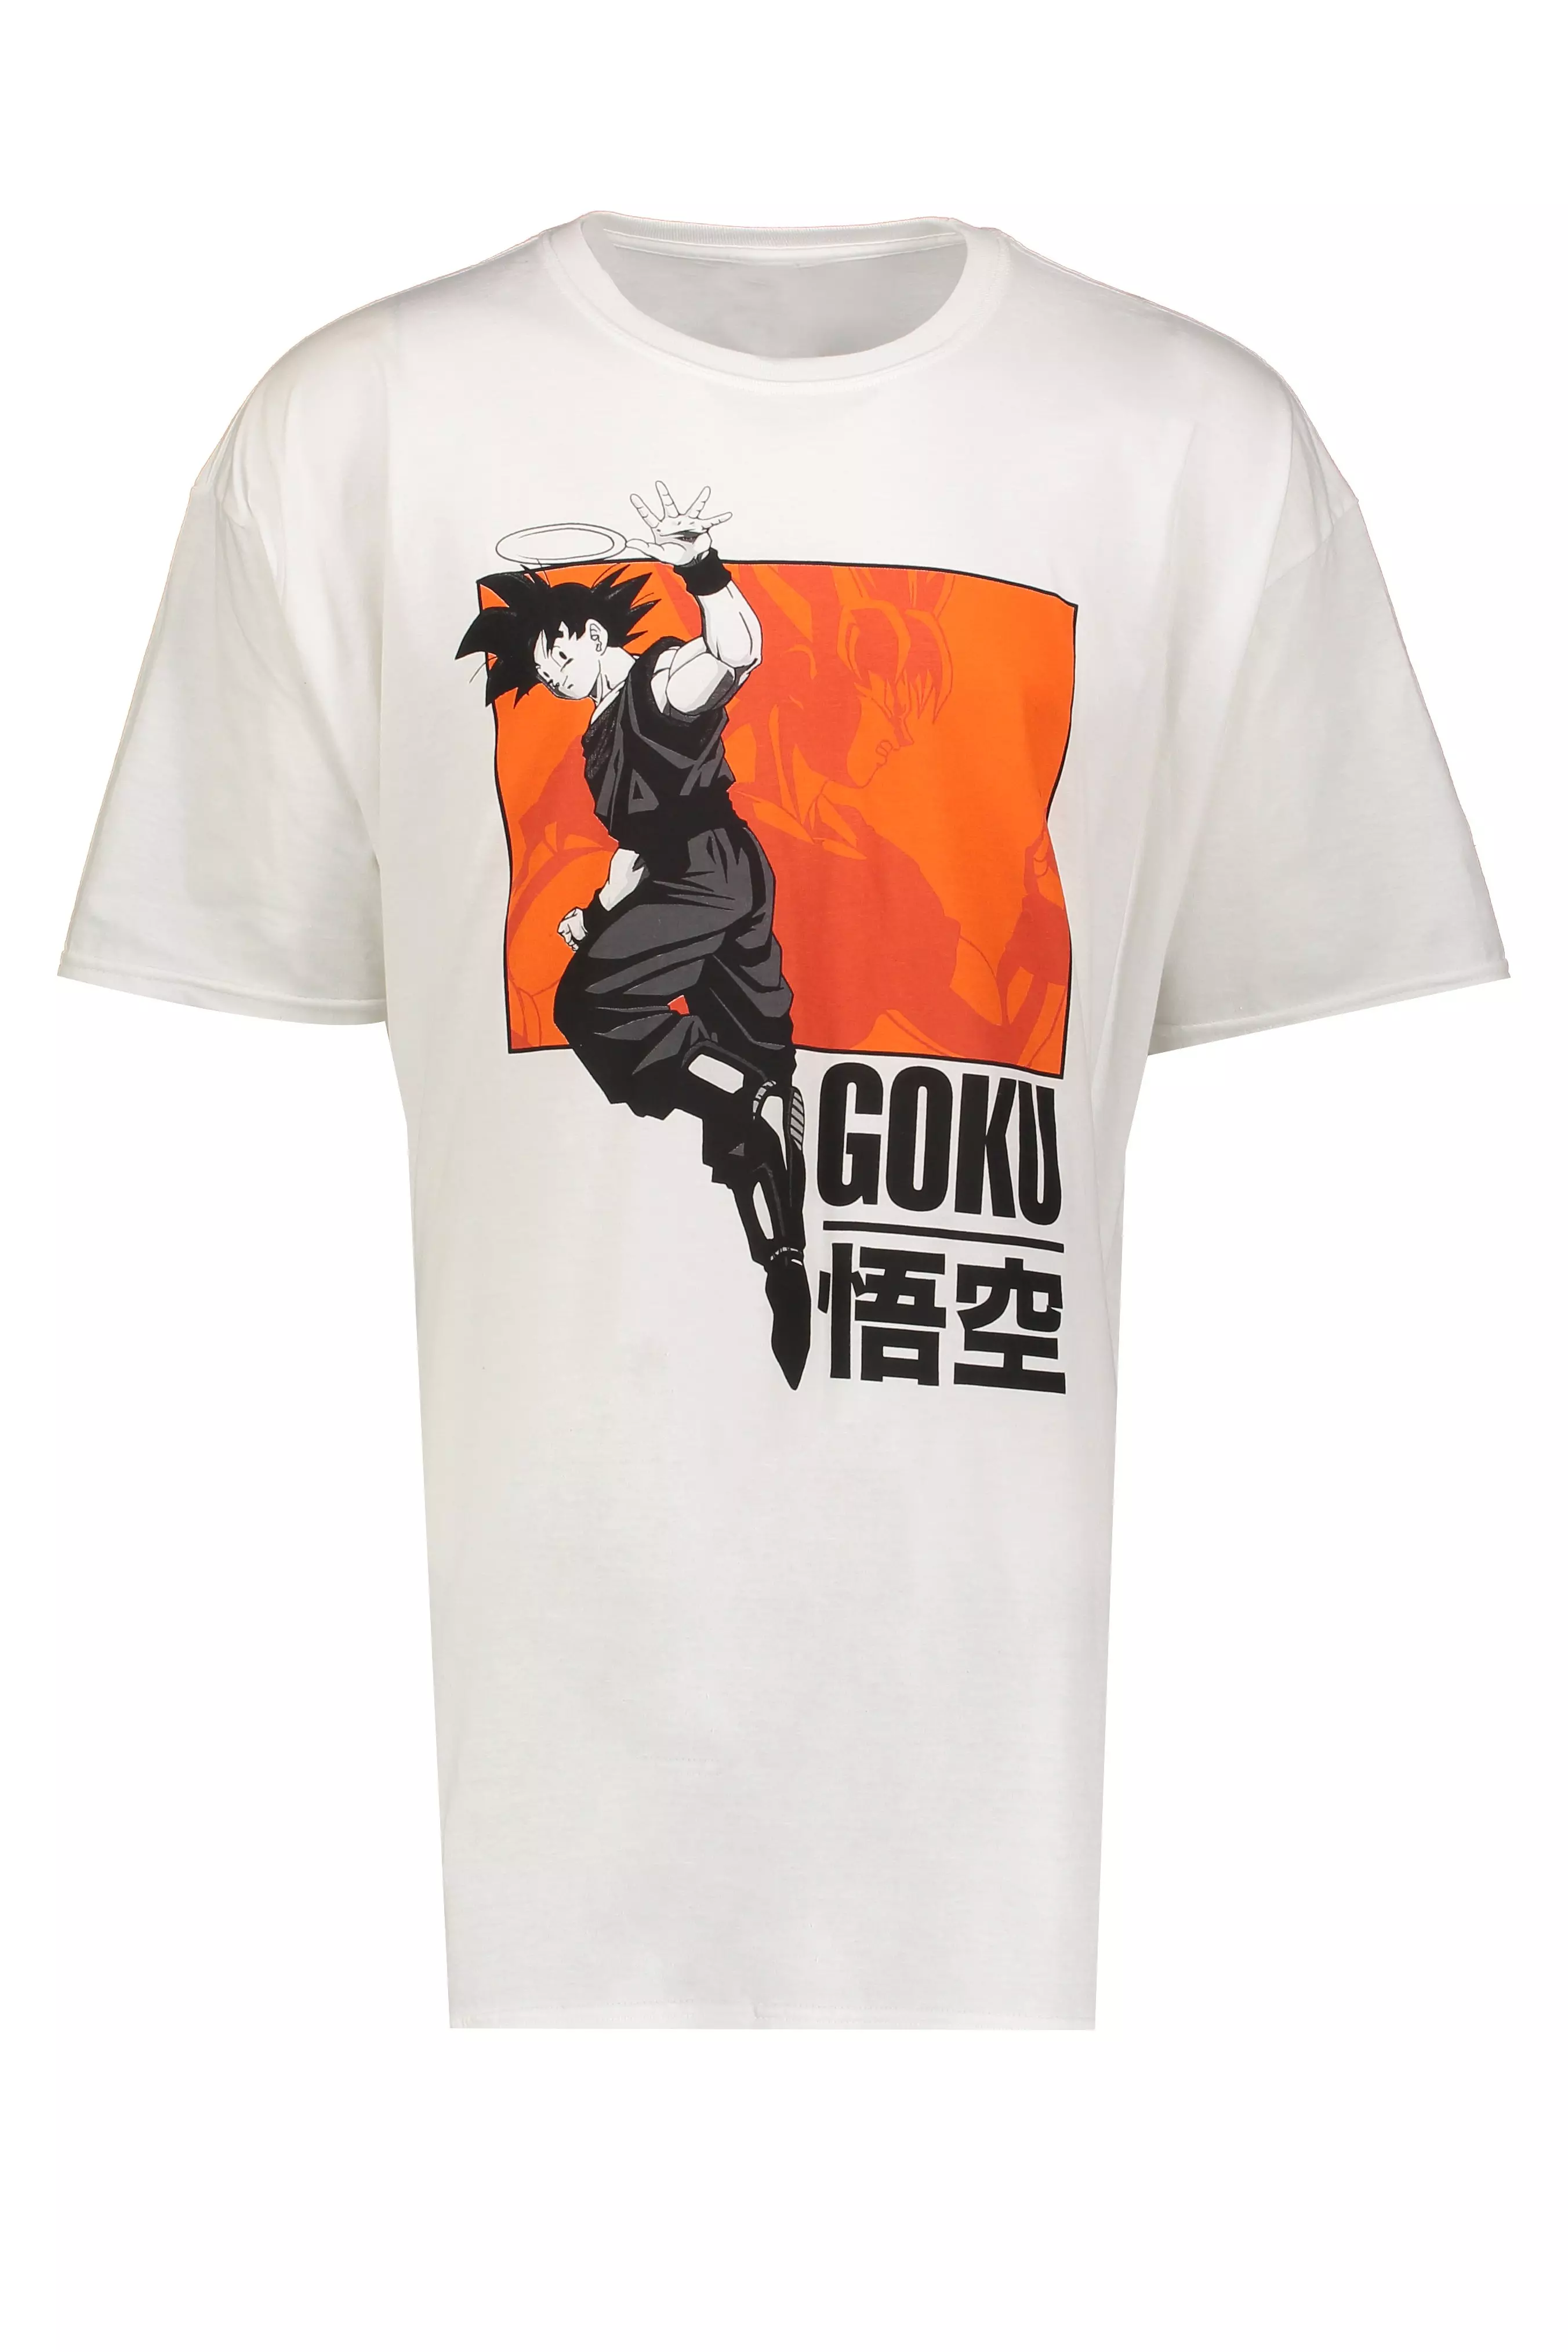 Goku Dragonball Z Oversized License T-Shirt